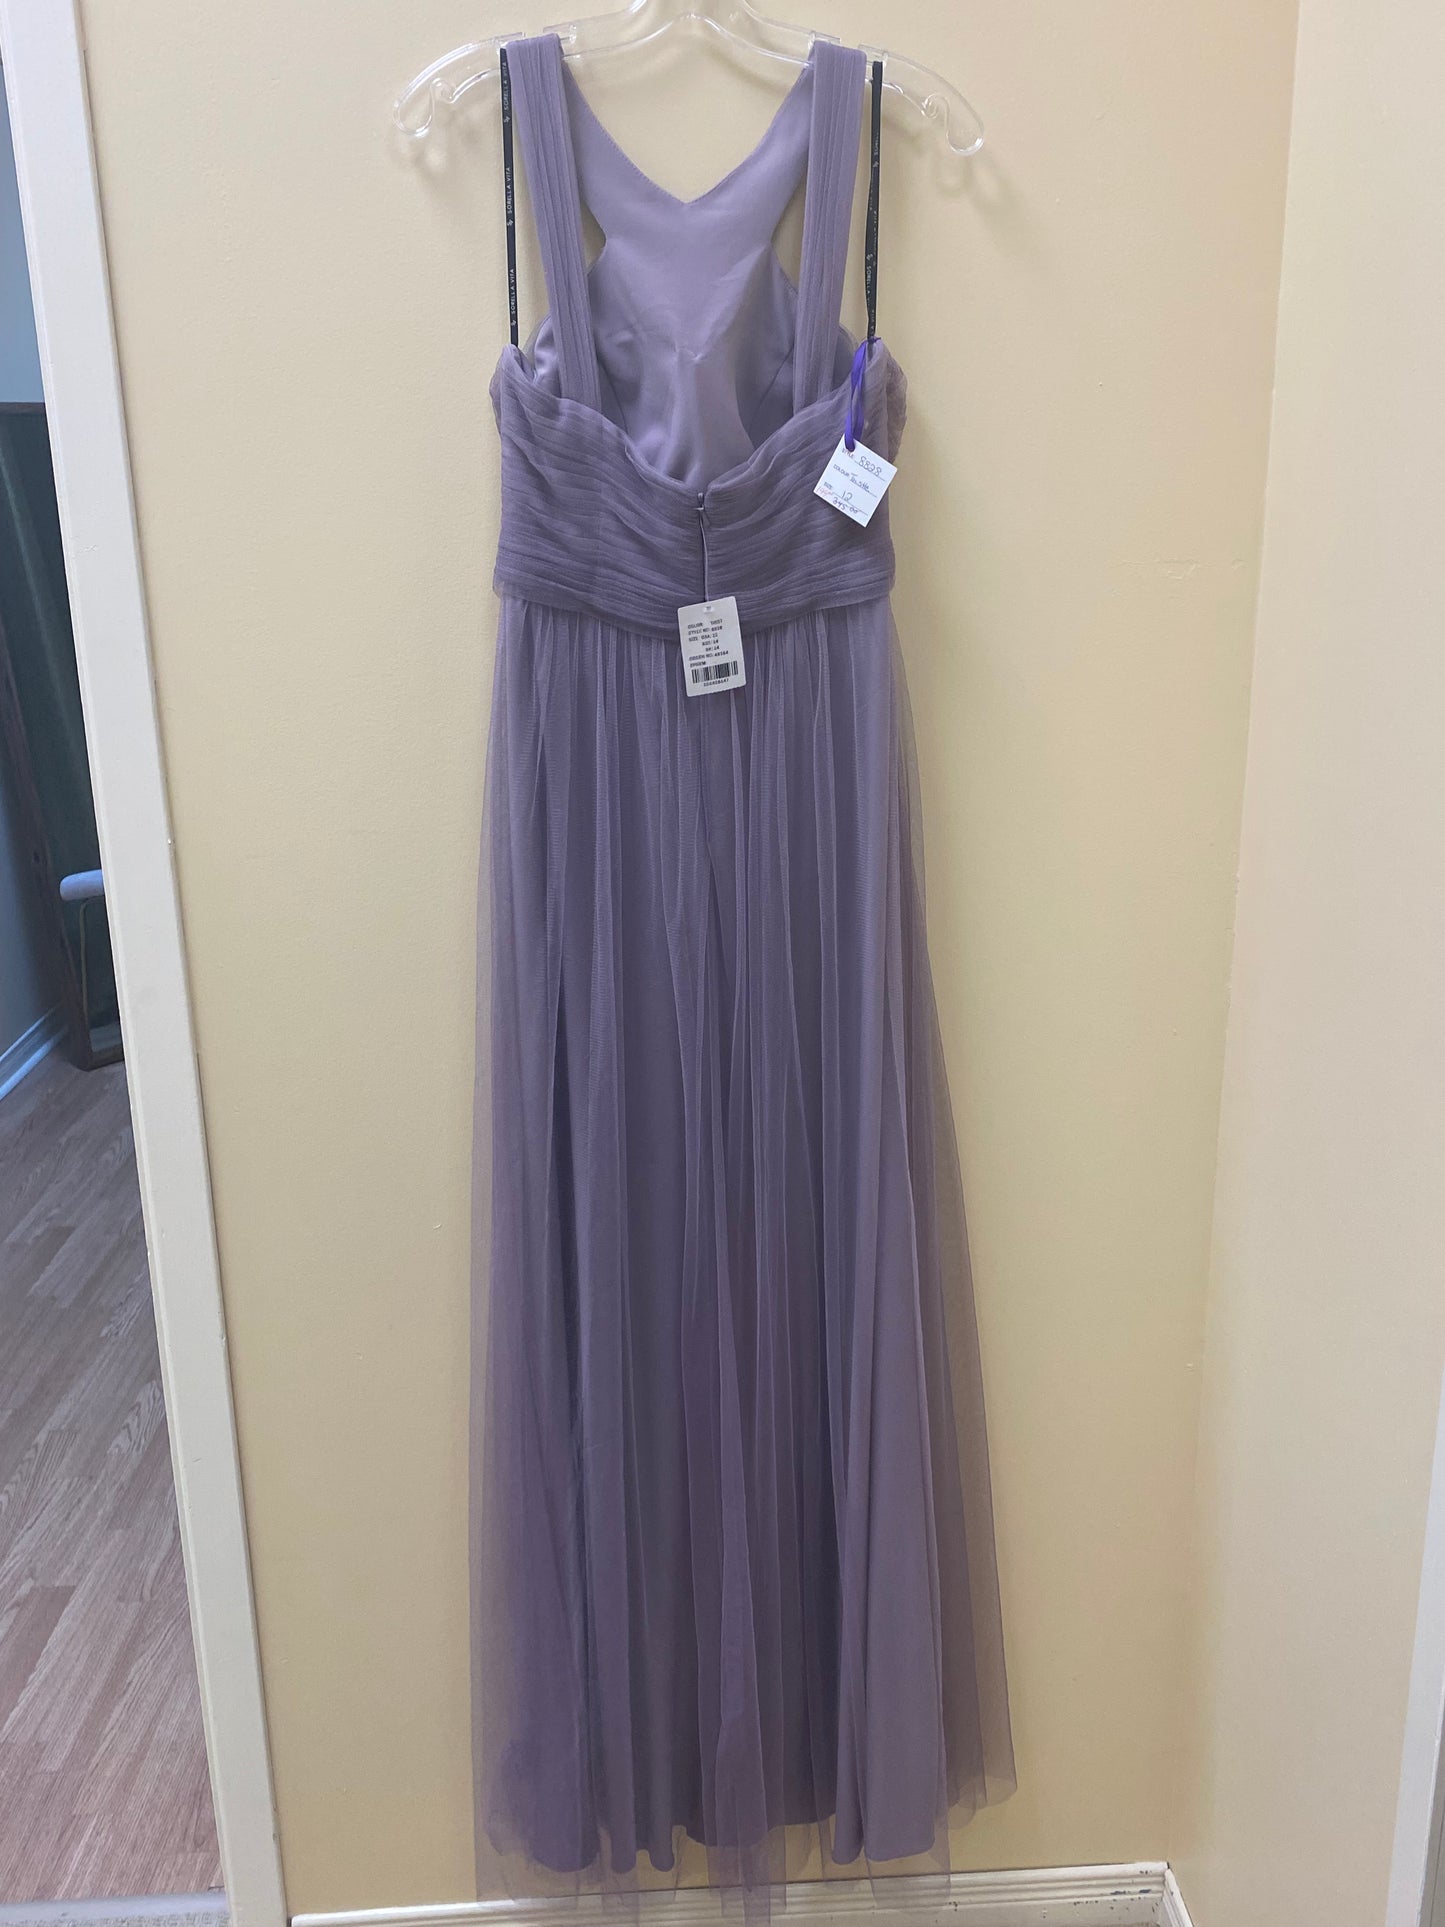 SORELLA VITA - 8828 - Thisle Size 12 Long Prom / Mother of the Bride / Bridesmaid Dress